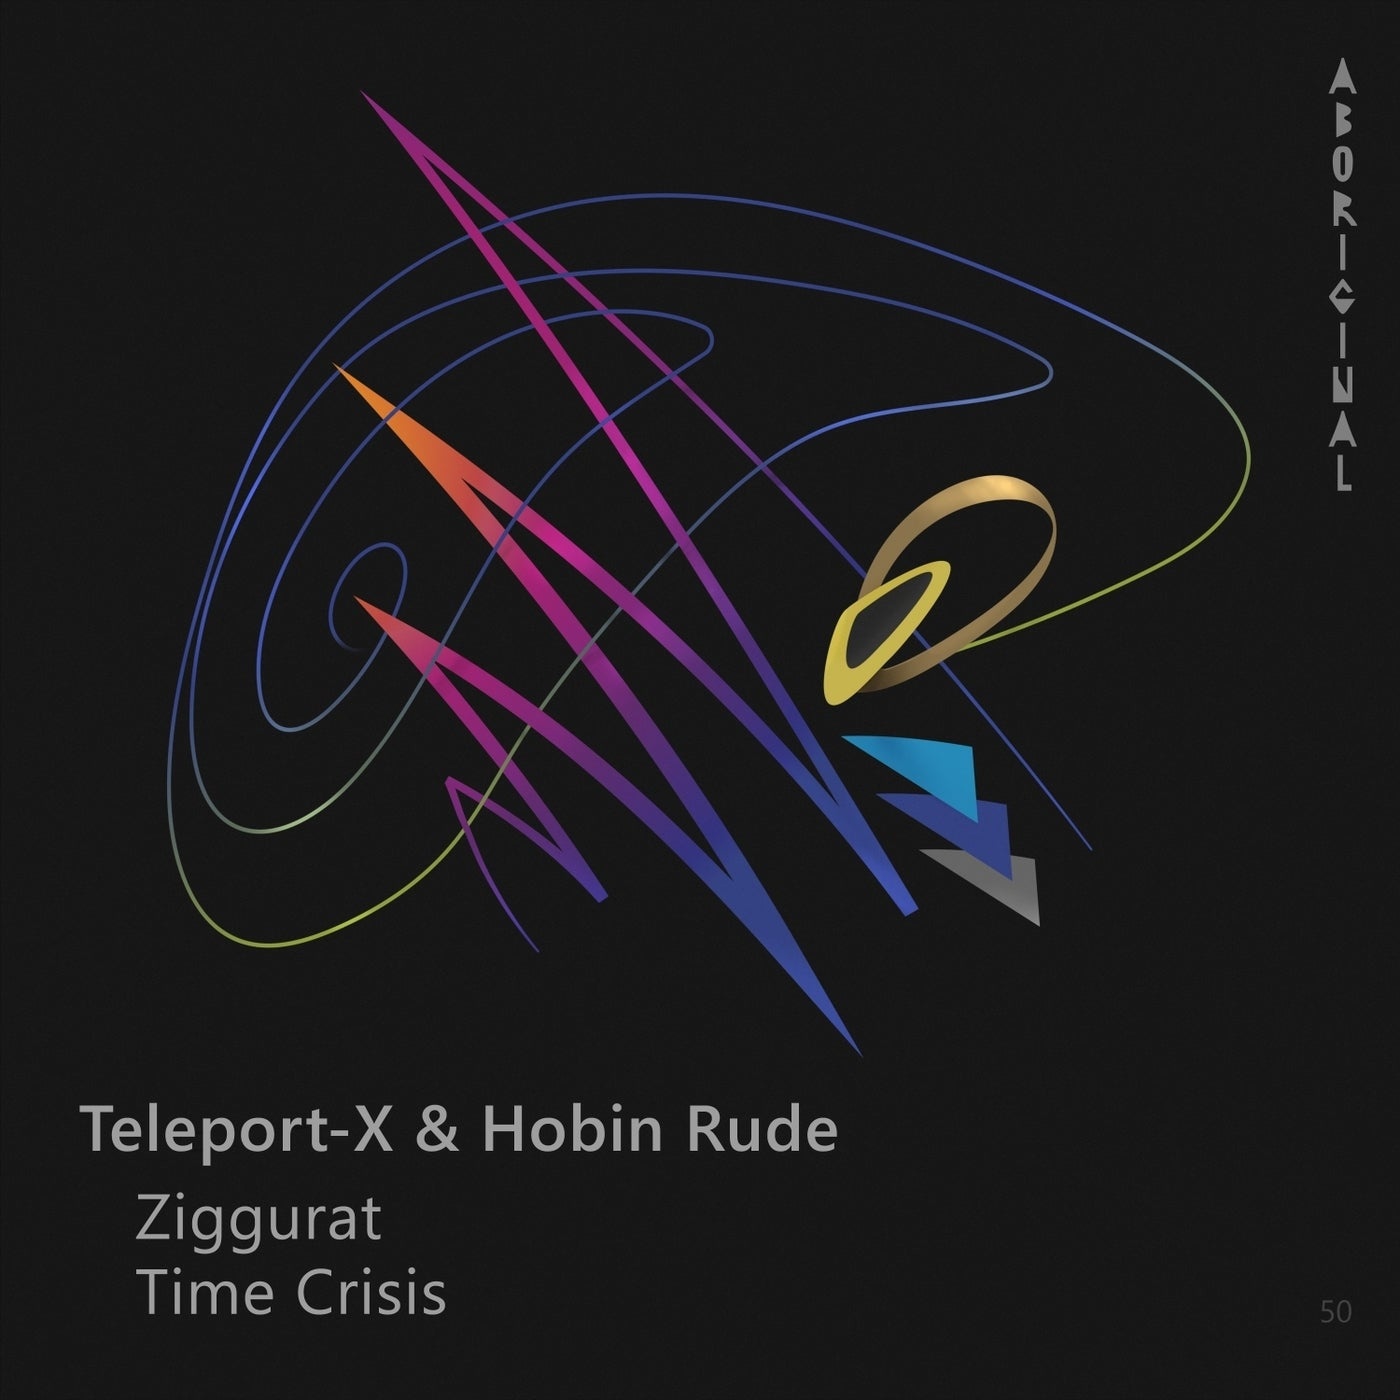 Teleport-X, Hobin Rude - Ziggurat - Time Crisis [ABO050]